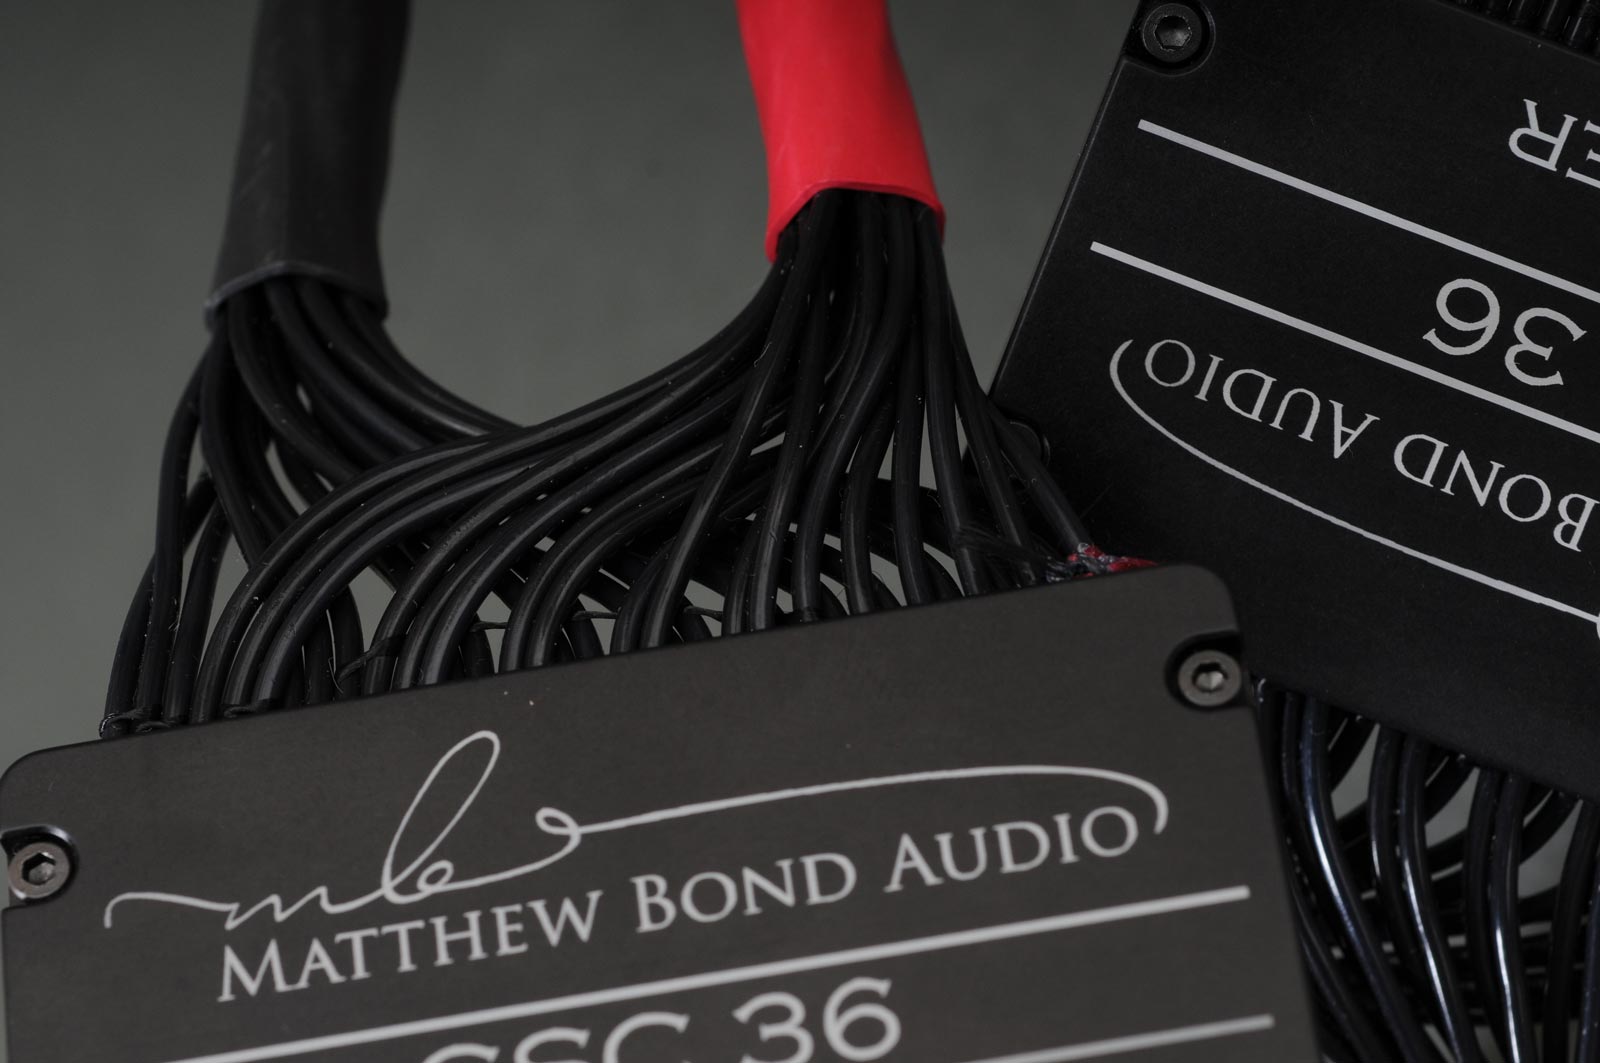 Matthew Bond Audio GSC 36 amplifier cable closeup